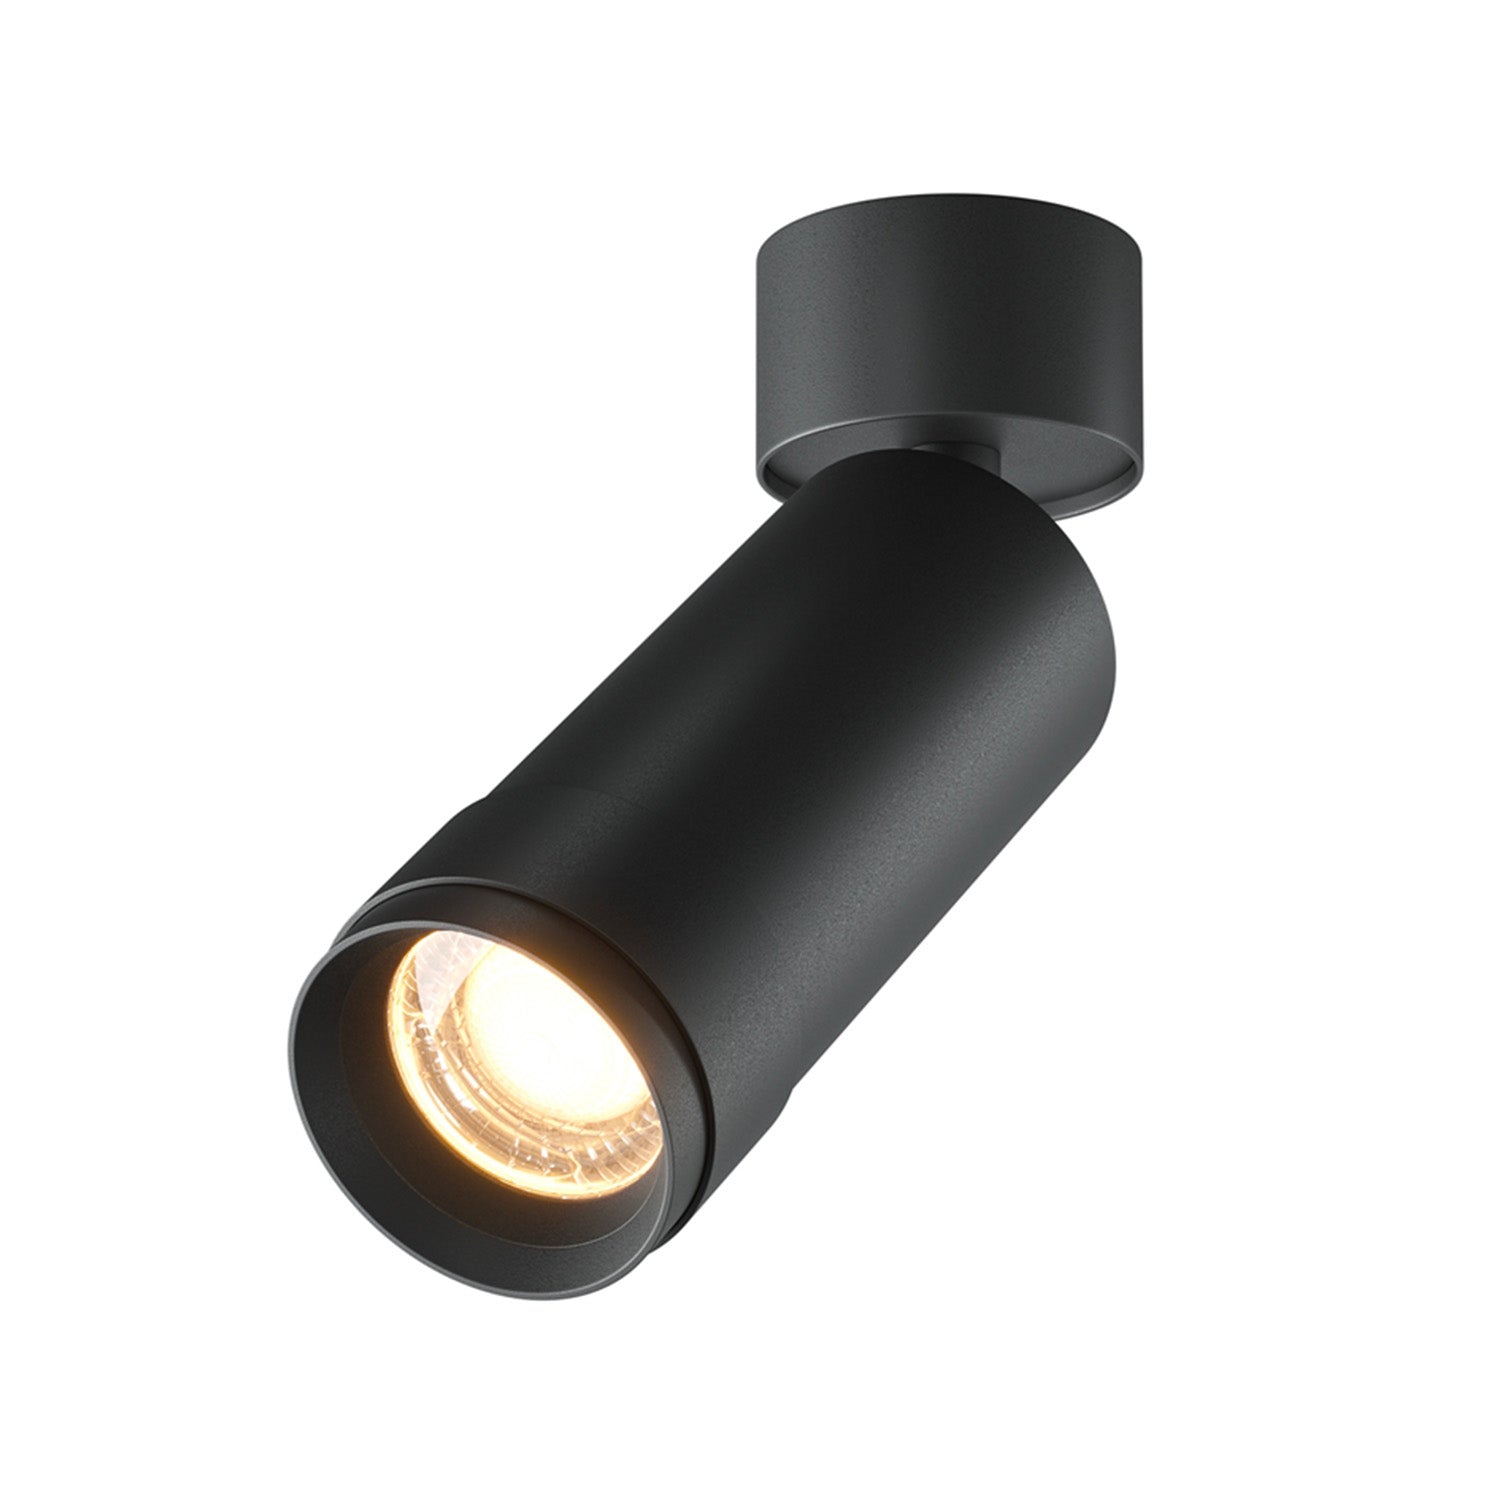 FOCUS ZOOM - Spot applique moderne en alu LED intégrée